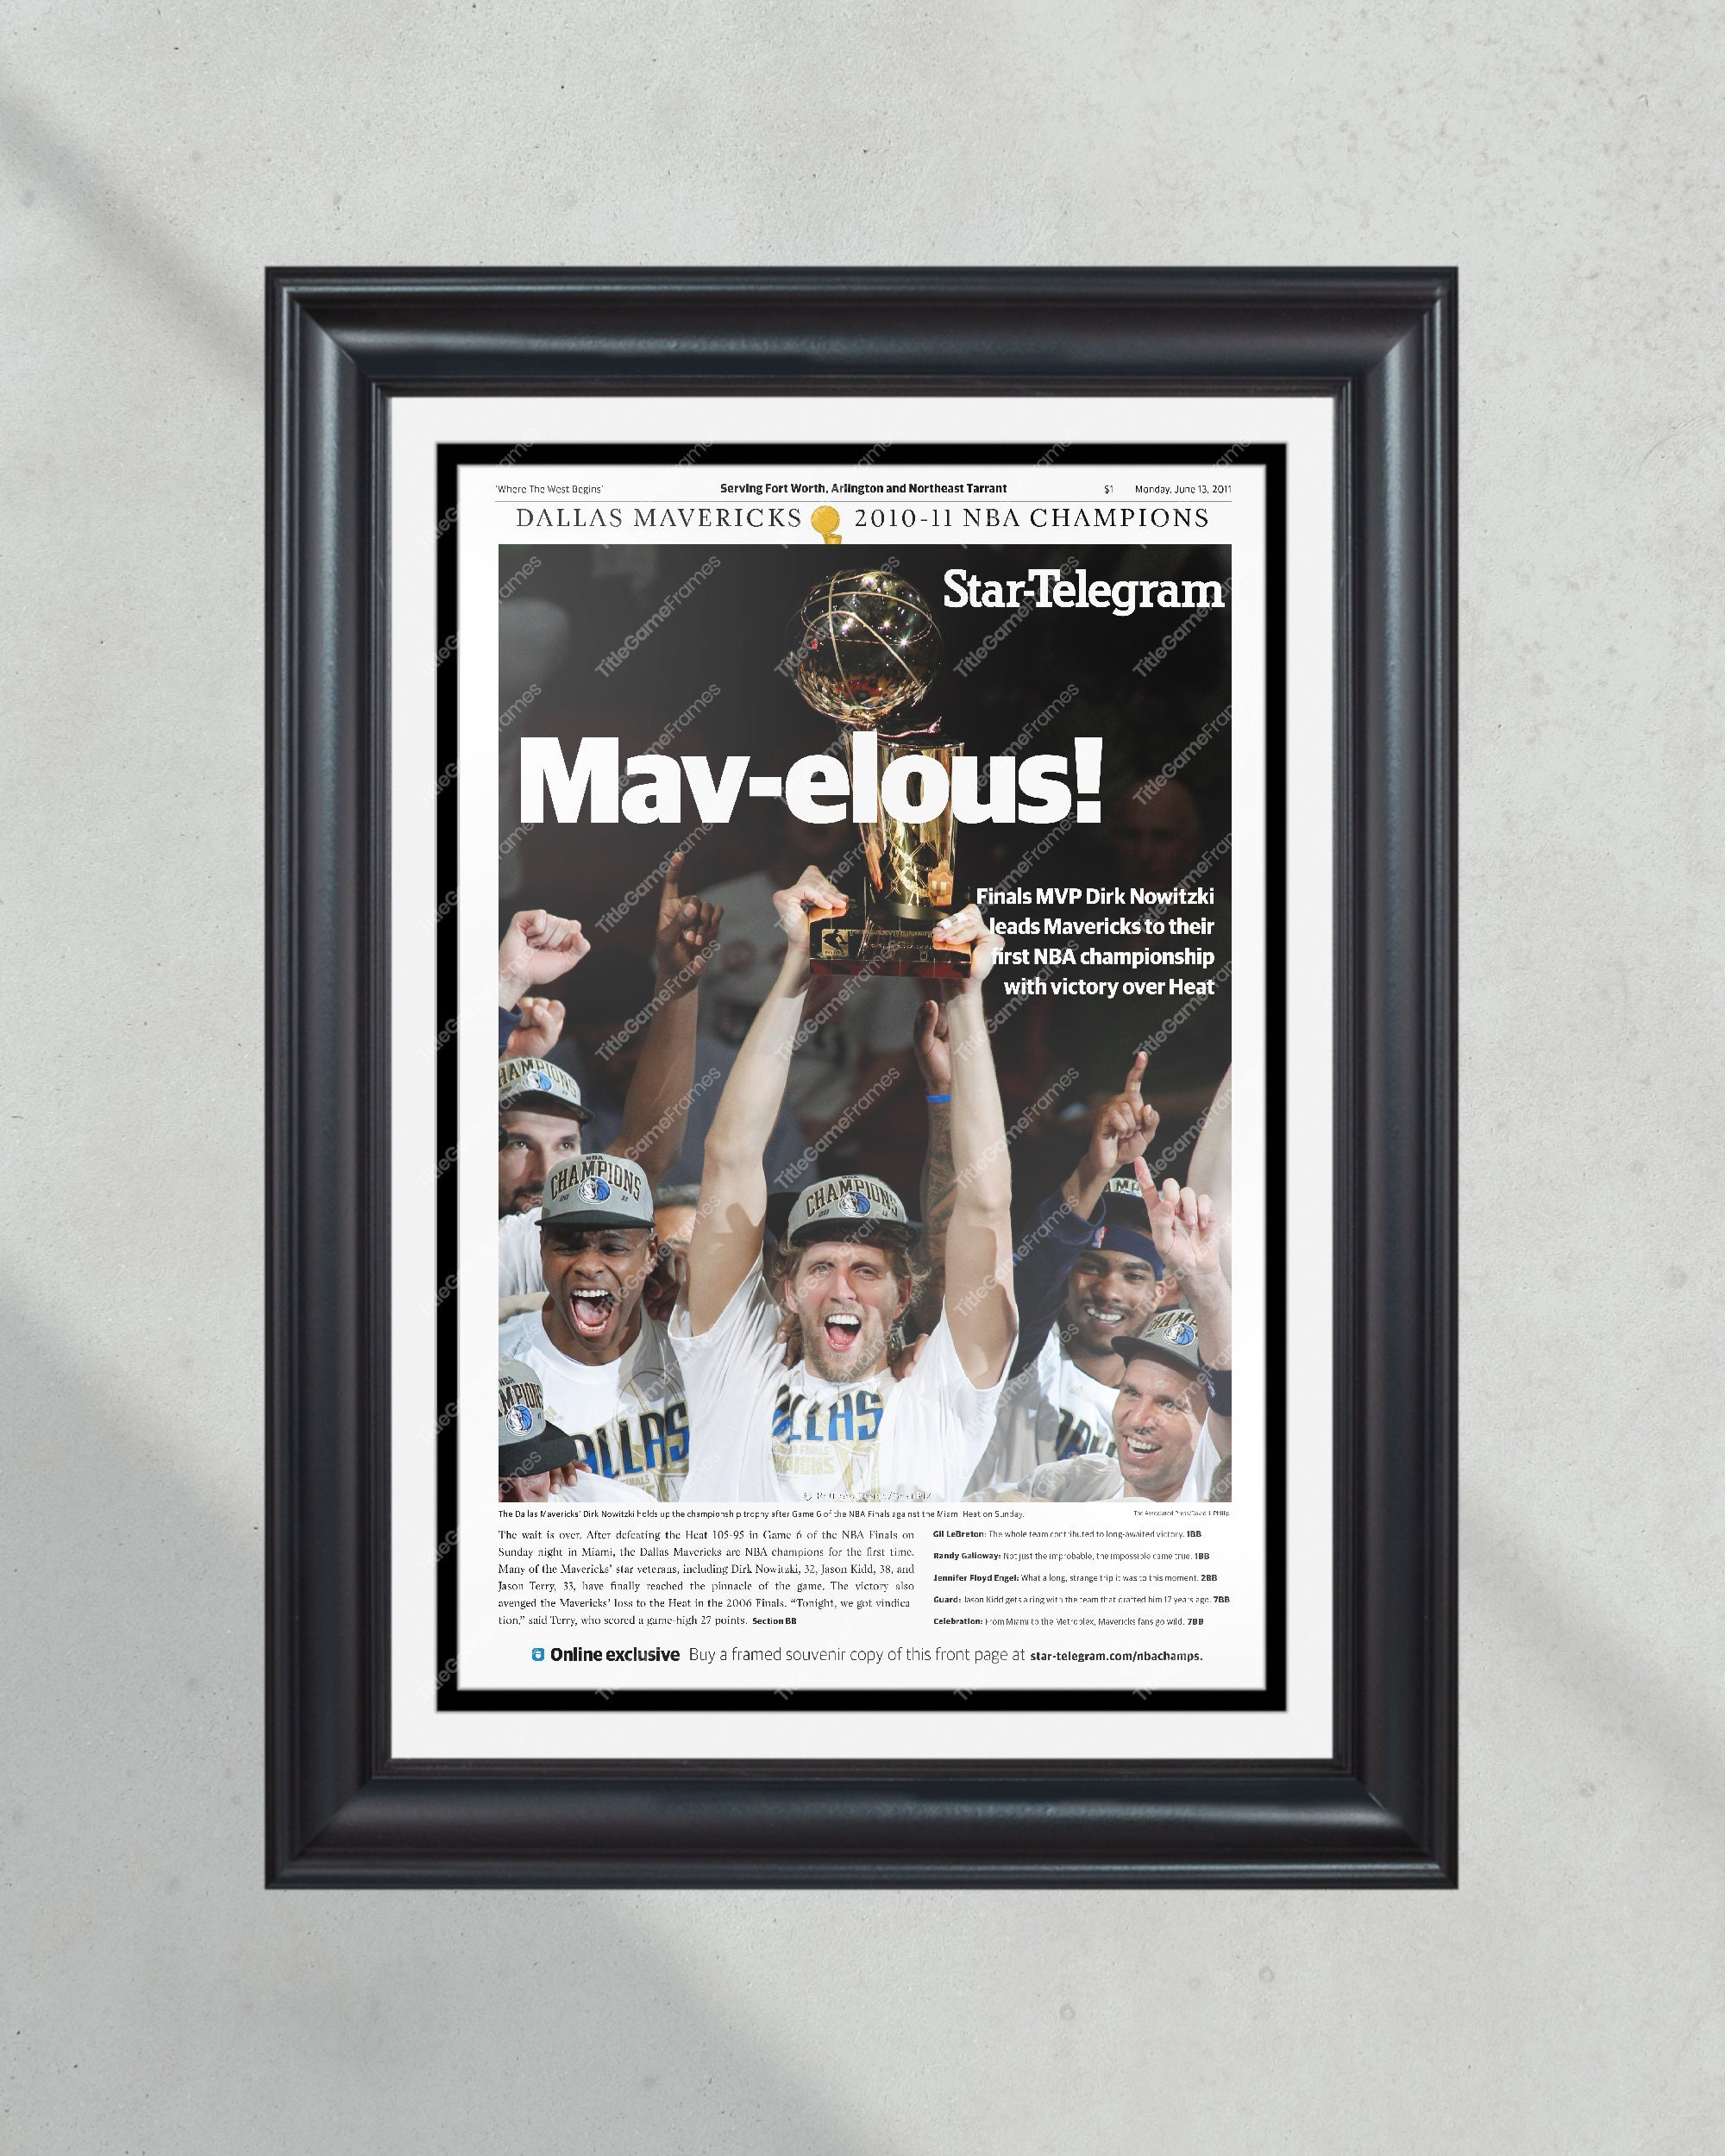 NBA Buzz - On this date in 2011, the Dallas Mavericks won their